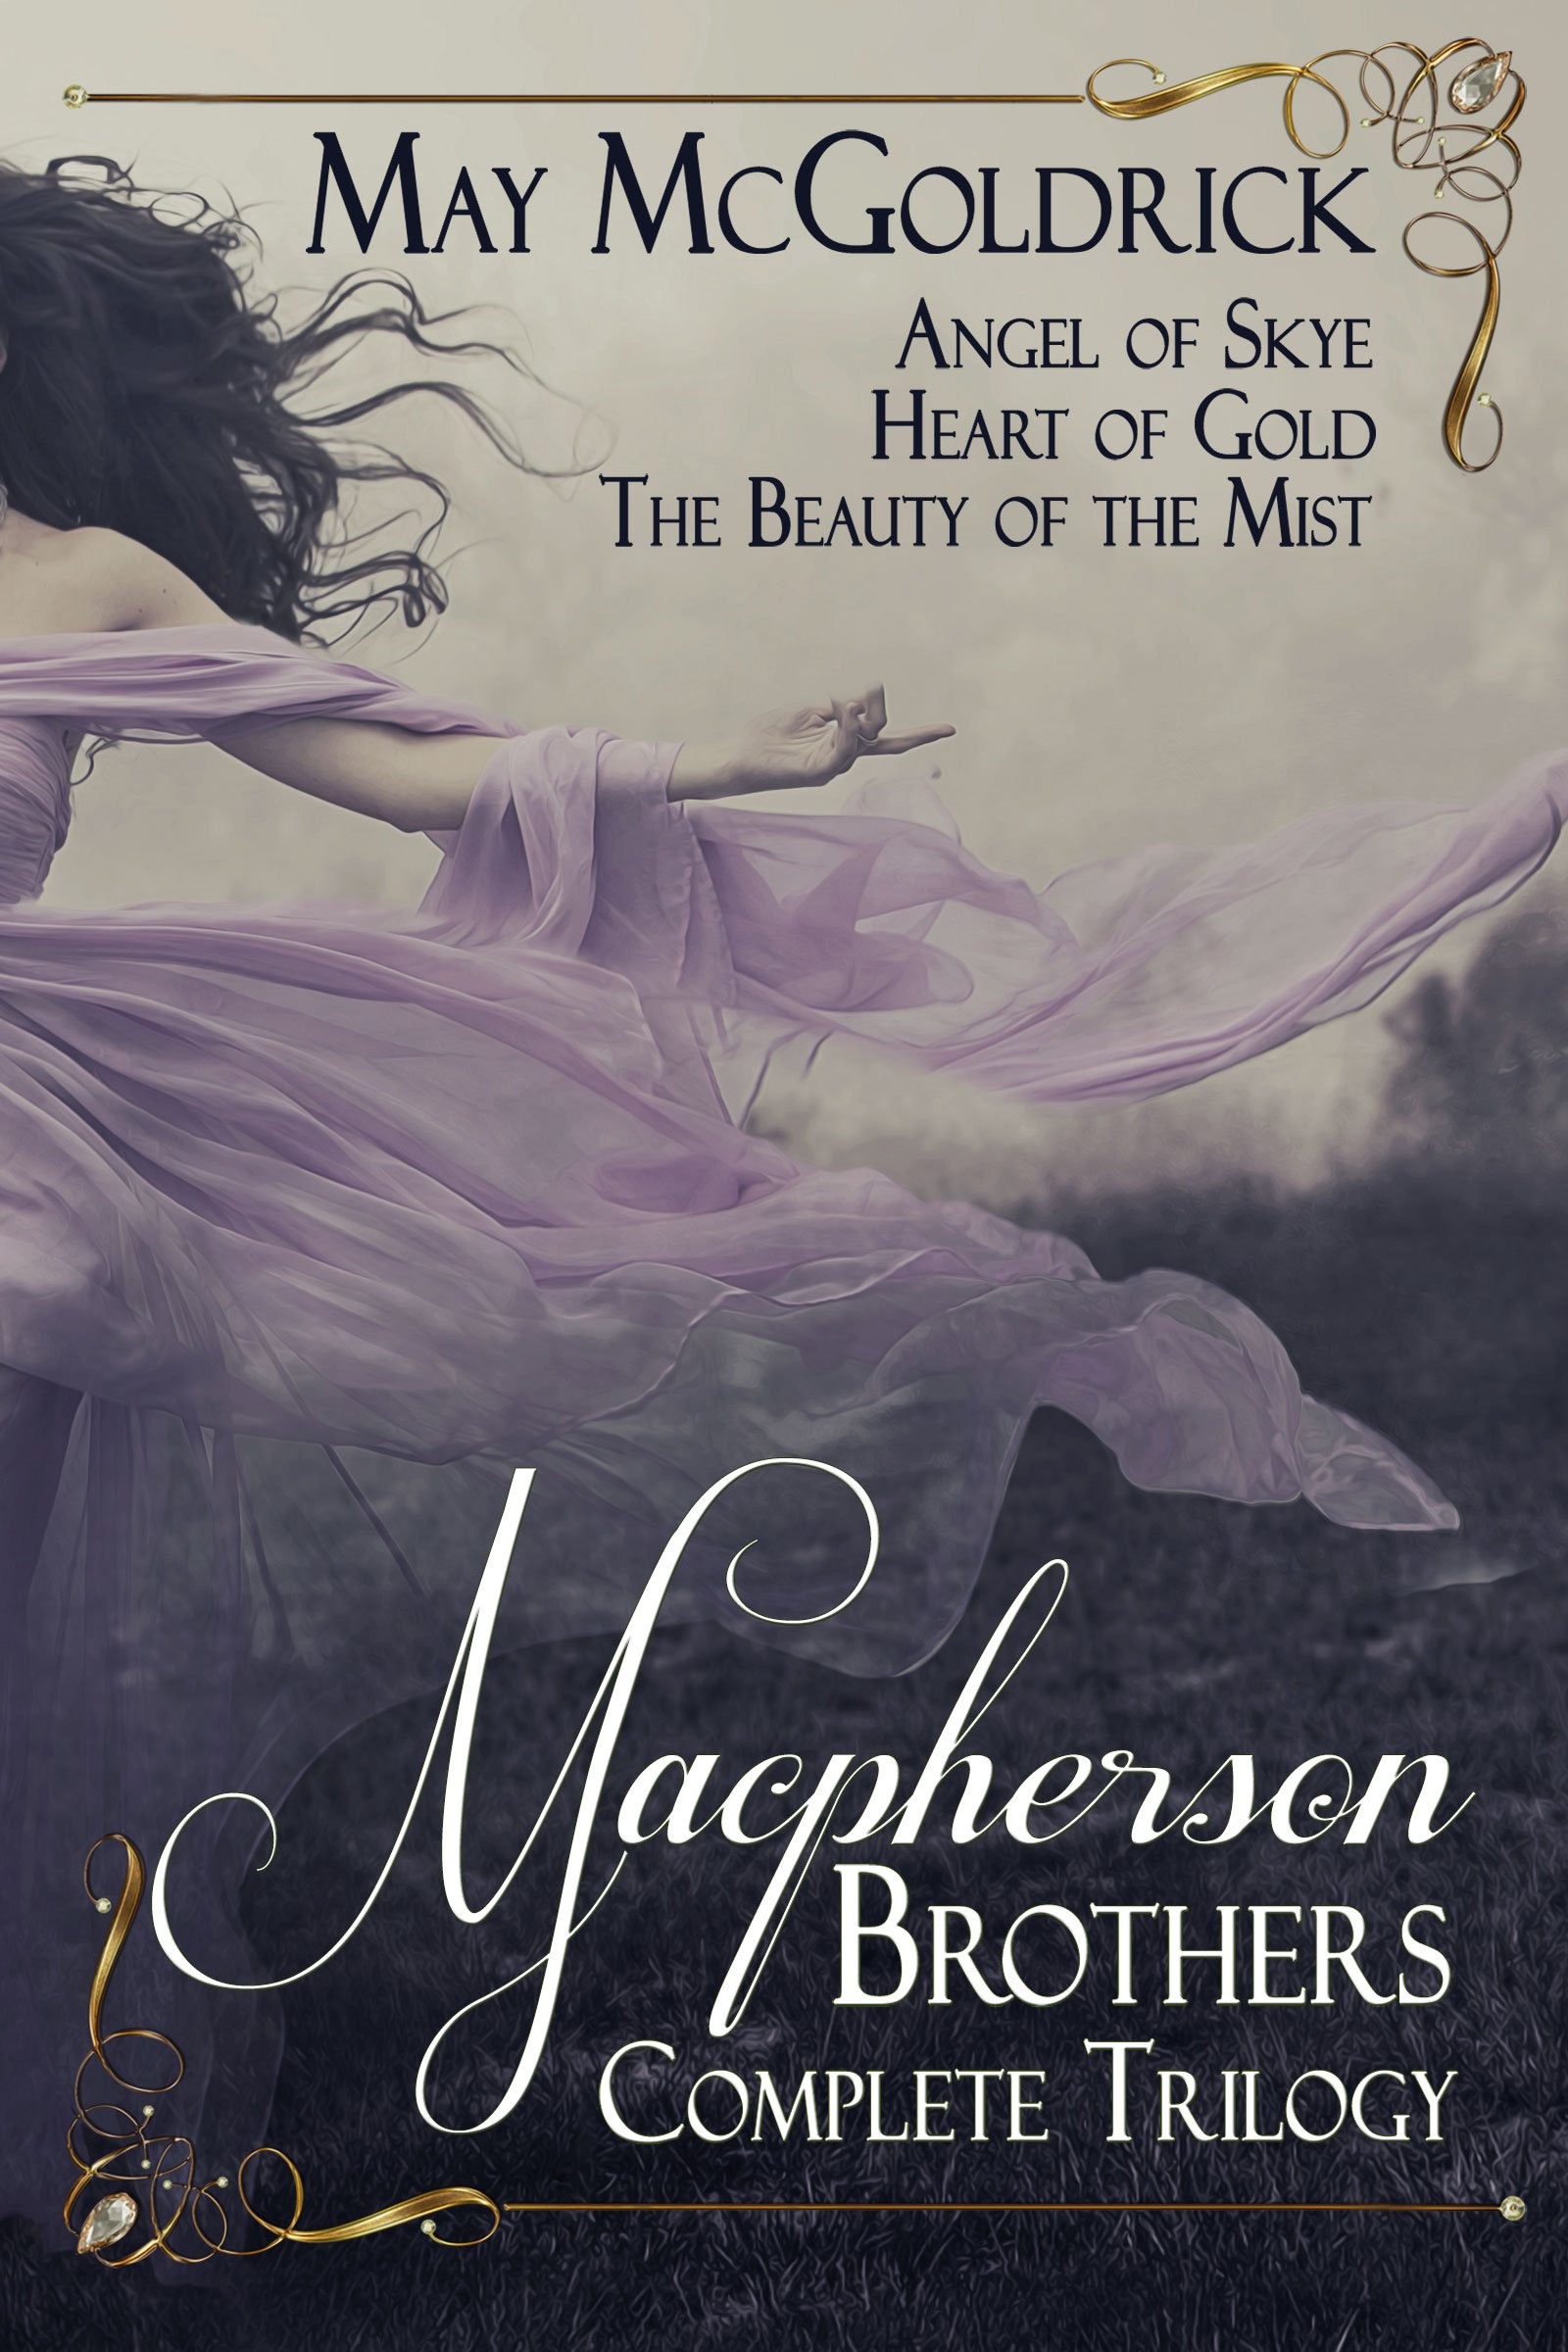 mcpherson-trilogy-e-reader-cover.jpg